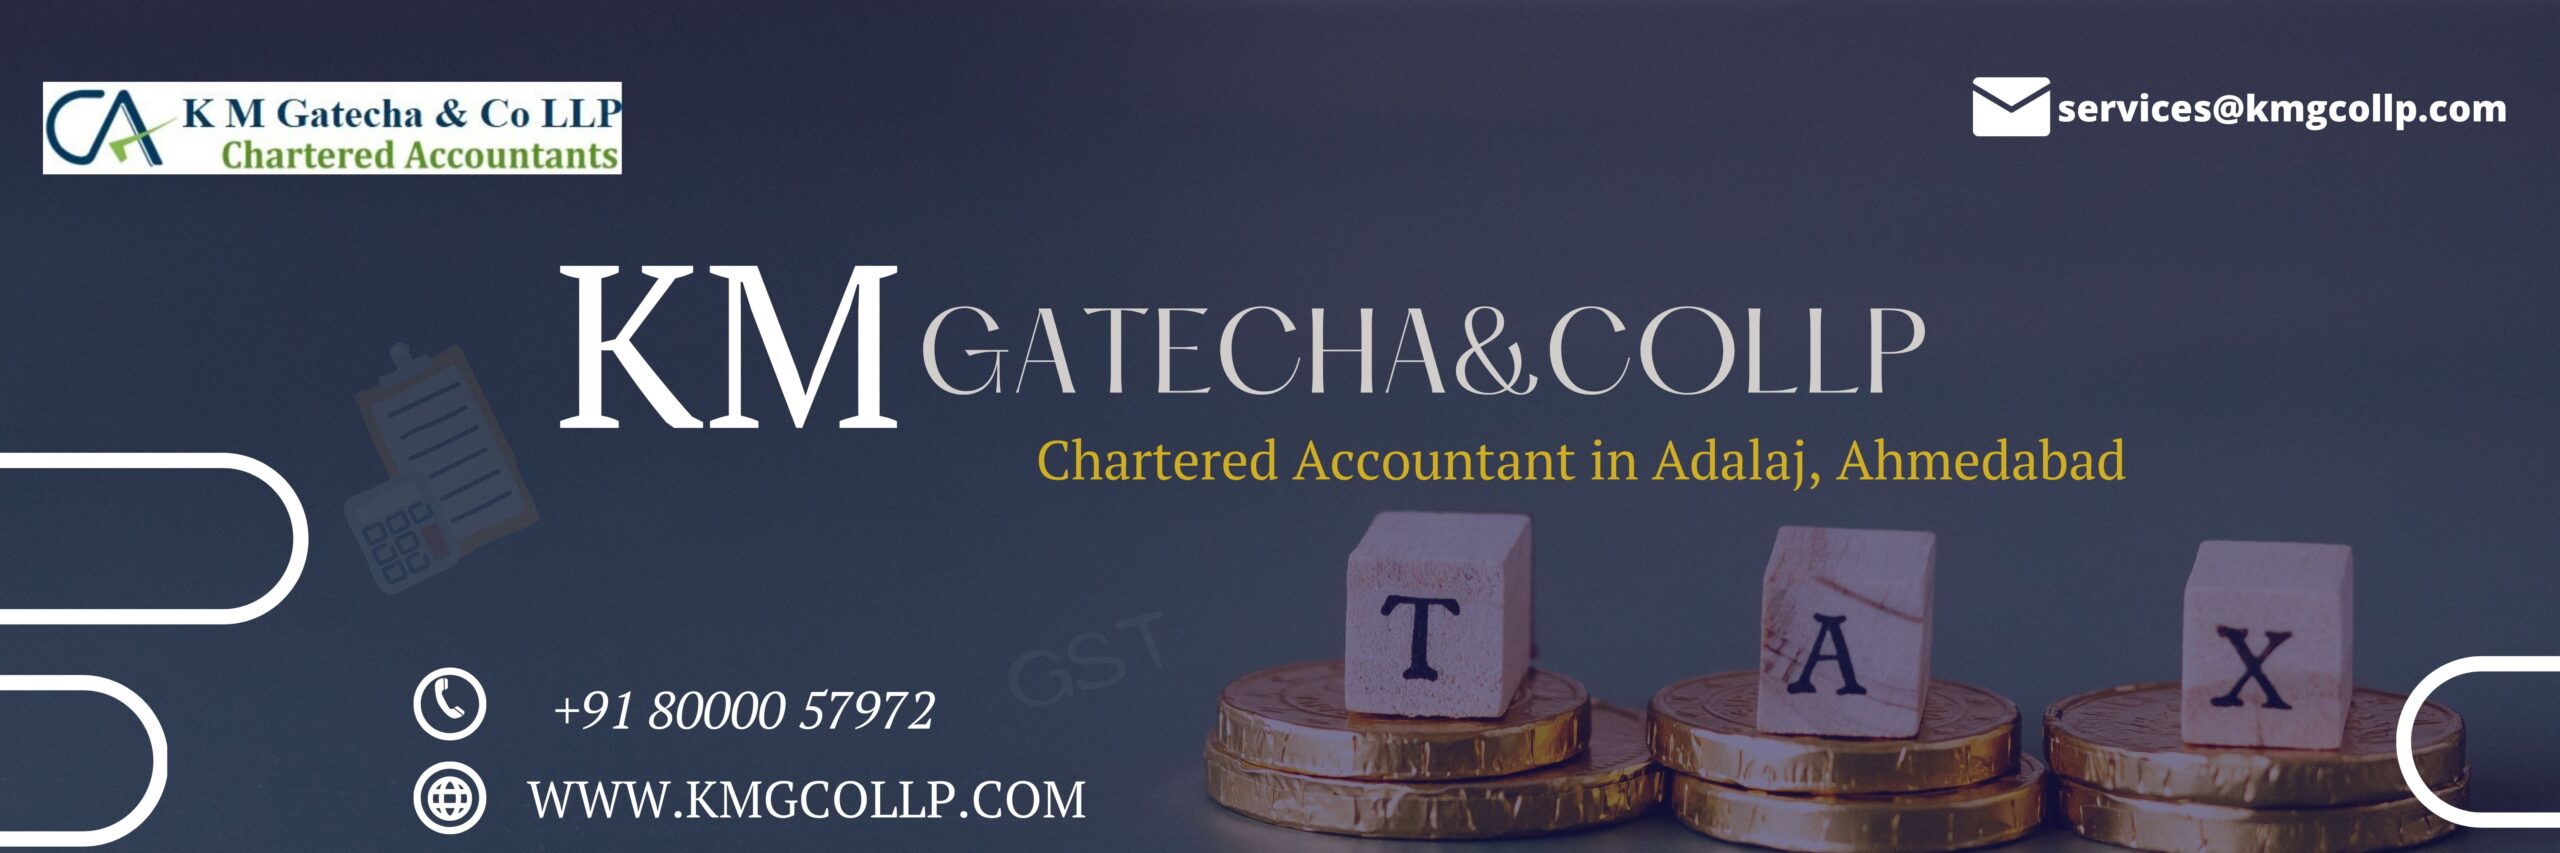 ca chartered accountant in adalaj